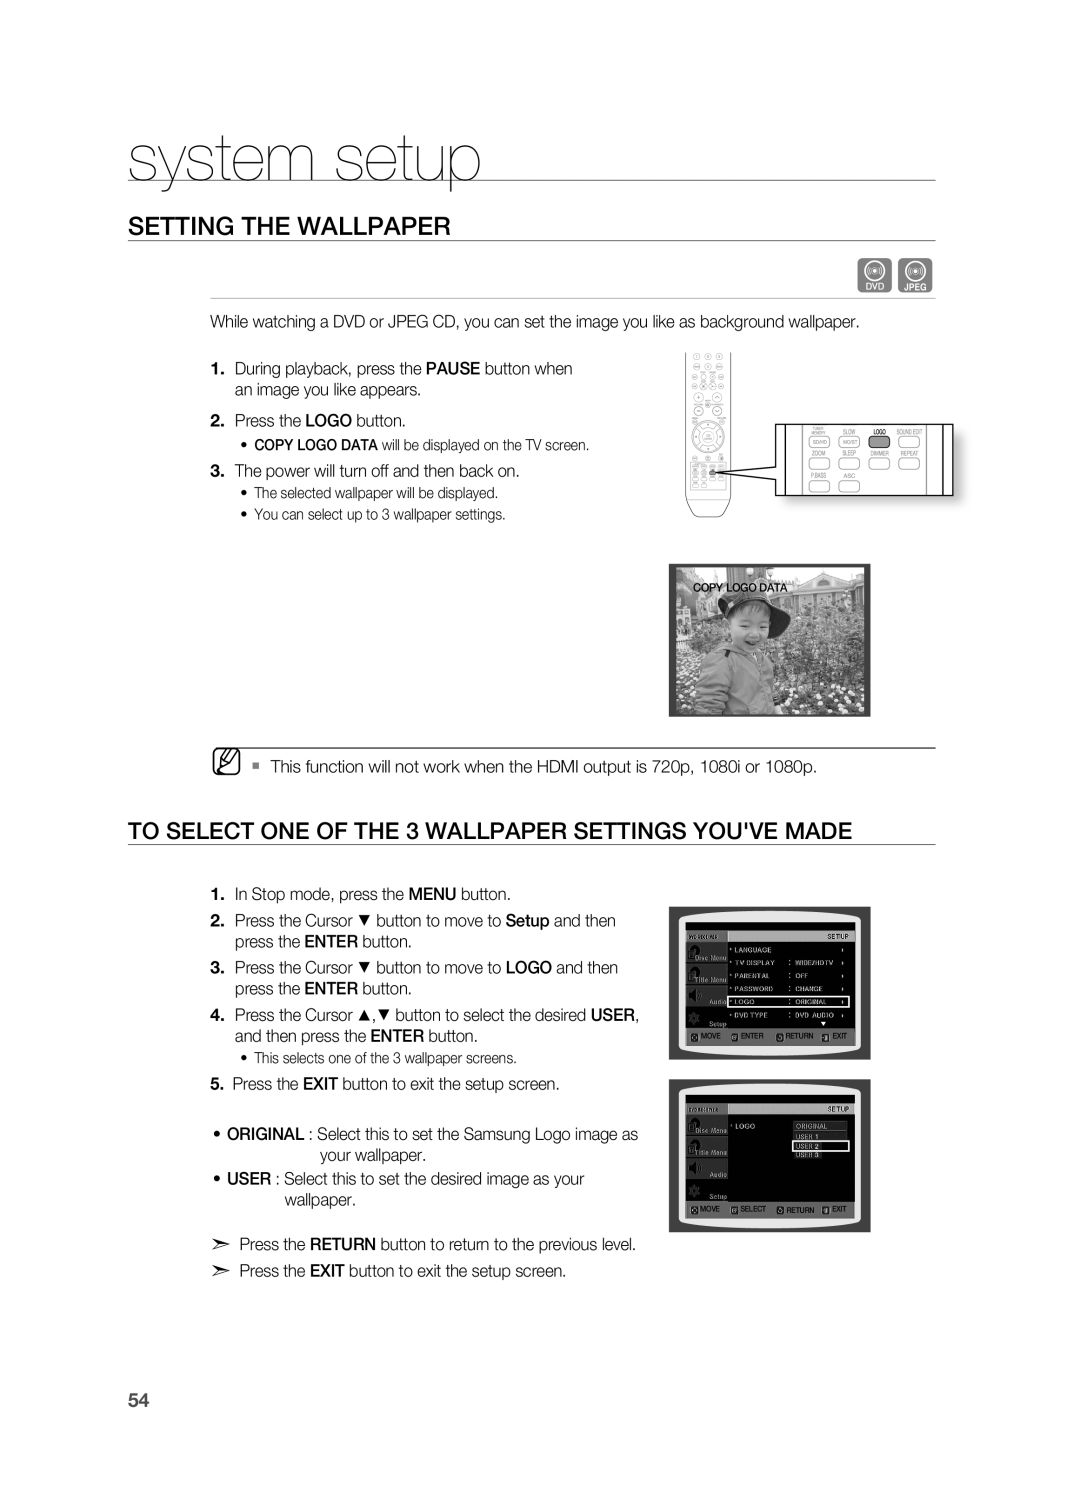 Samsung HT-TWZ415 user manual SETTINg THE WALLPAPEr, system setup 